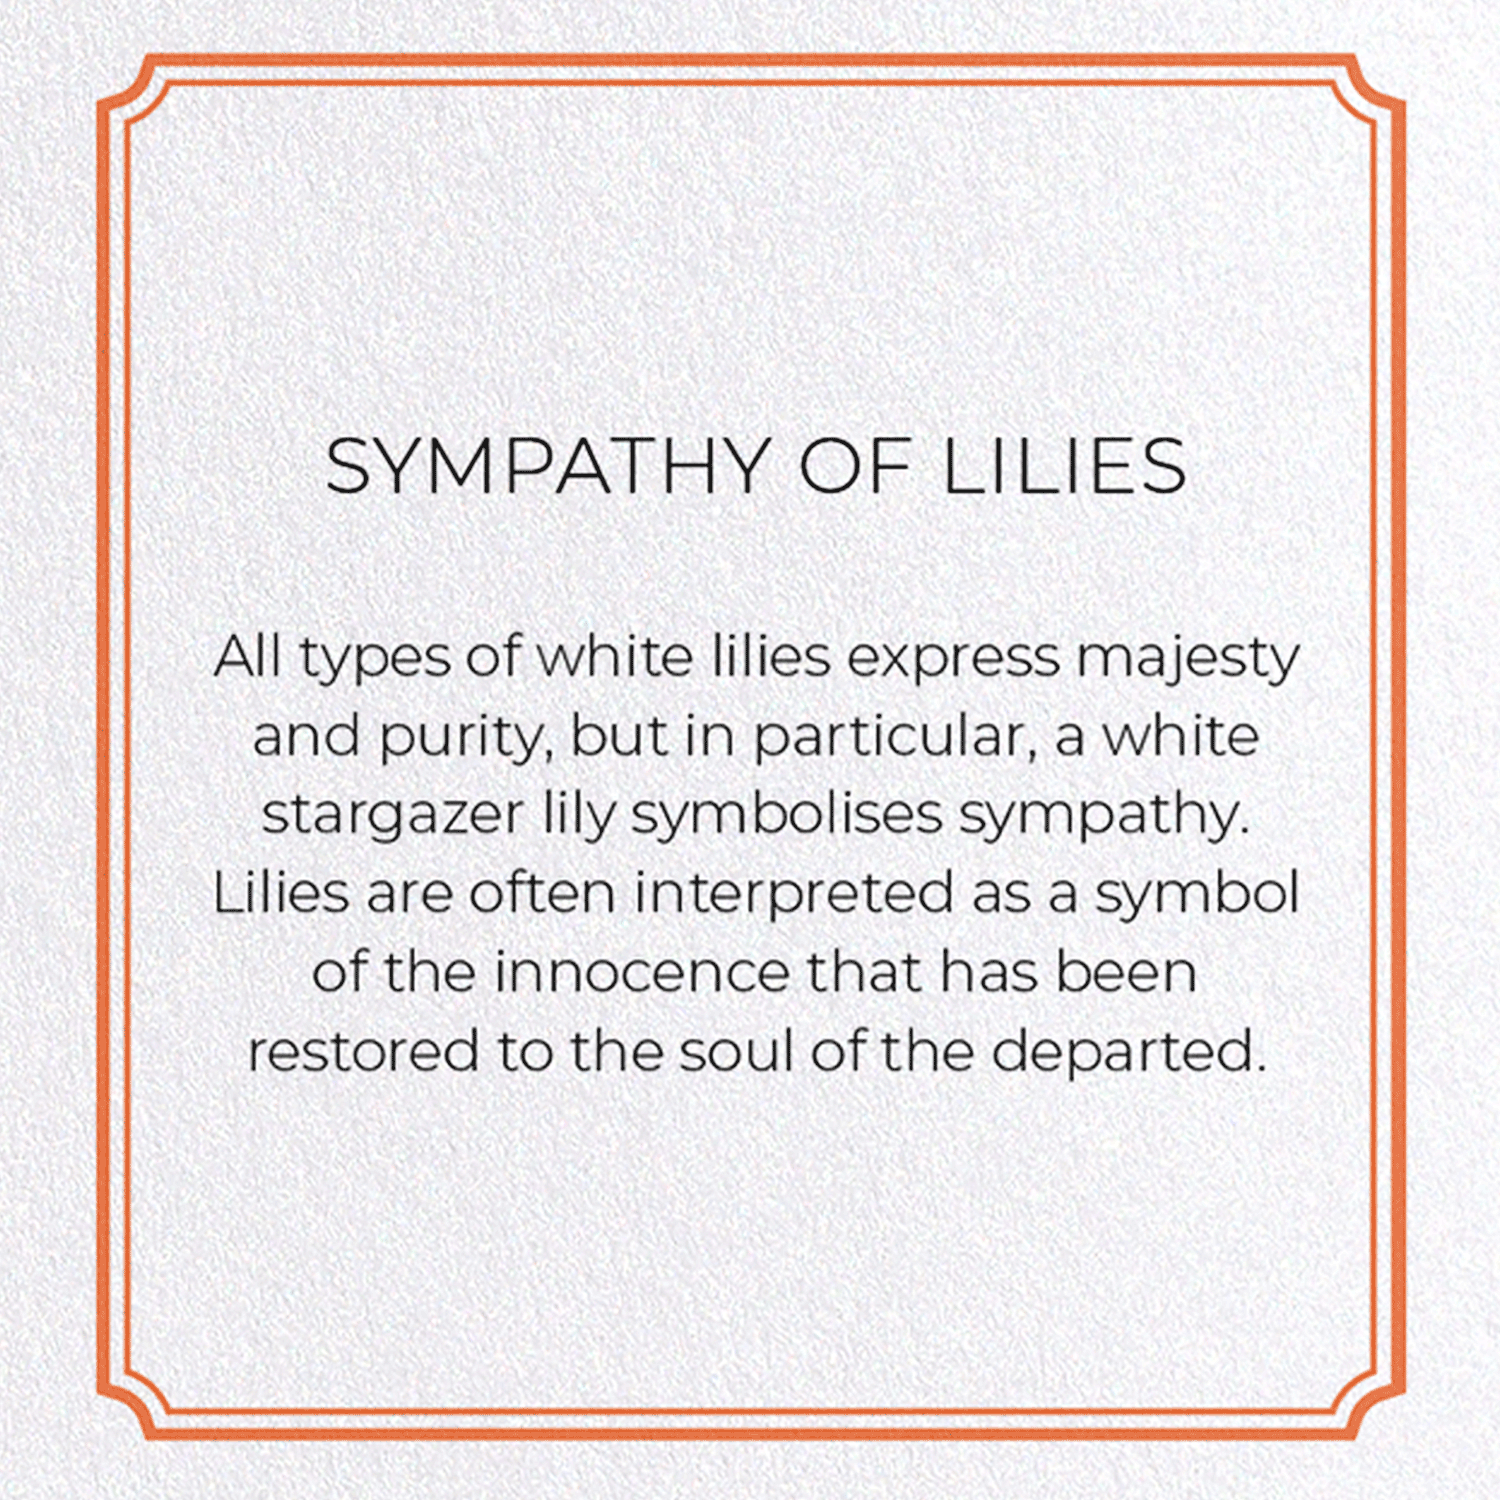 SYMPATHY OF LILIES